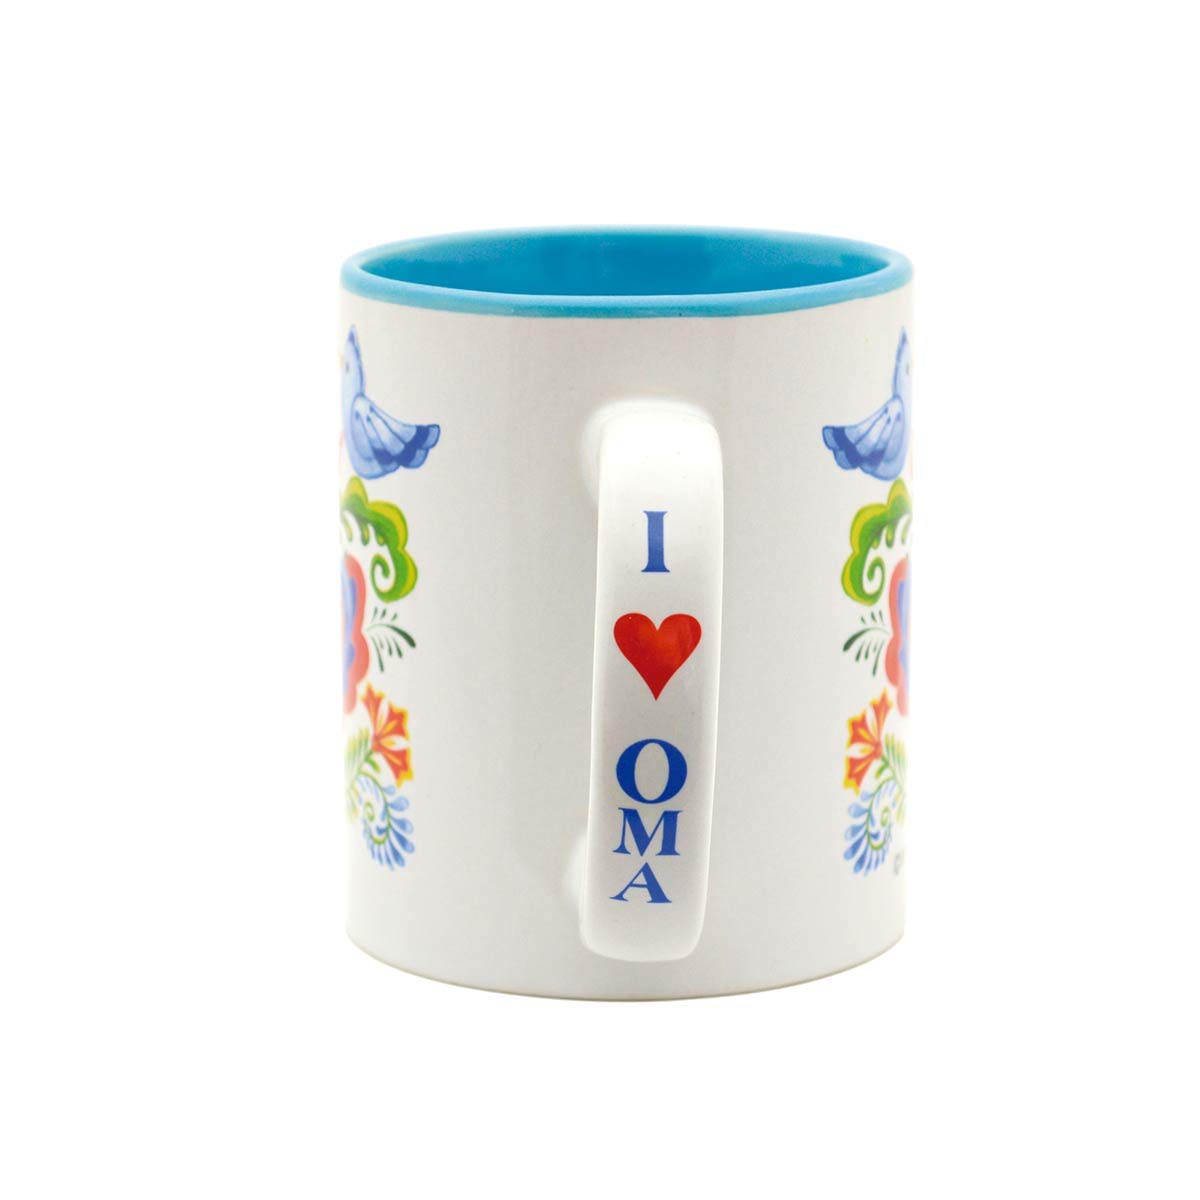 E.H.G | Essence of Europe Gifts - 12 oz. Ceramic Coffee Mug, Oma is the Greatest Design - Multicolor Ceramic Mug, German or Dutch Grandma - Premium Quality Coffee Mug - Multicolor